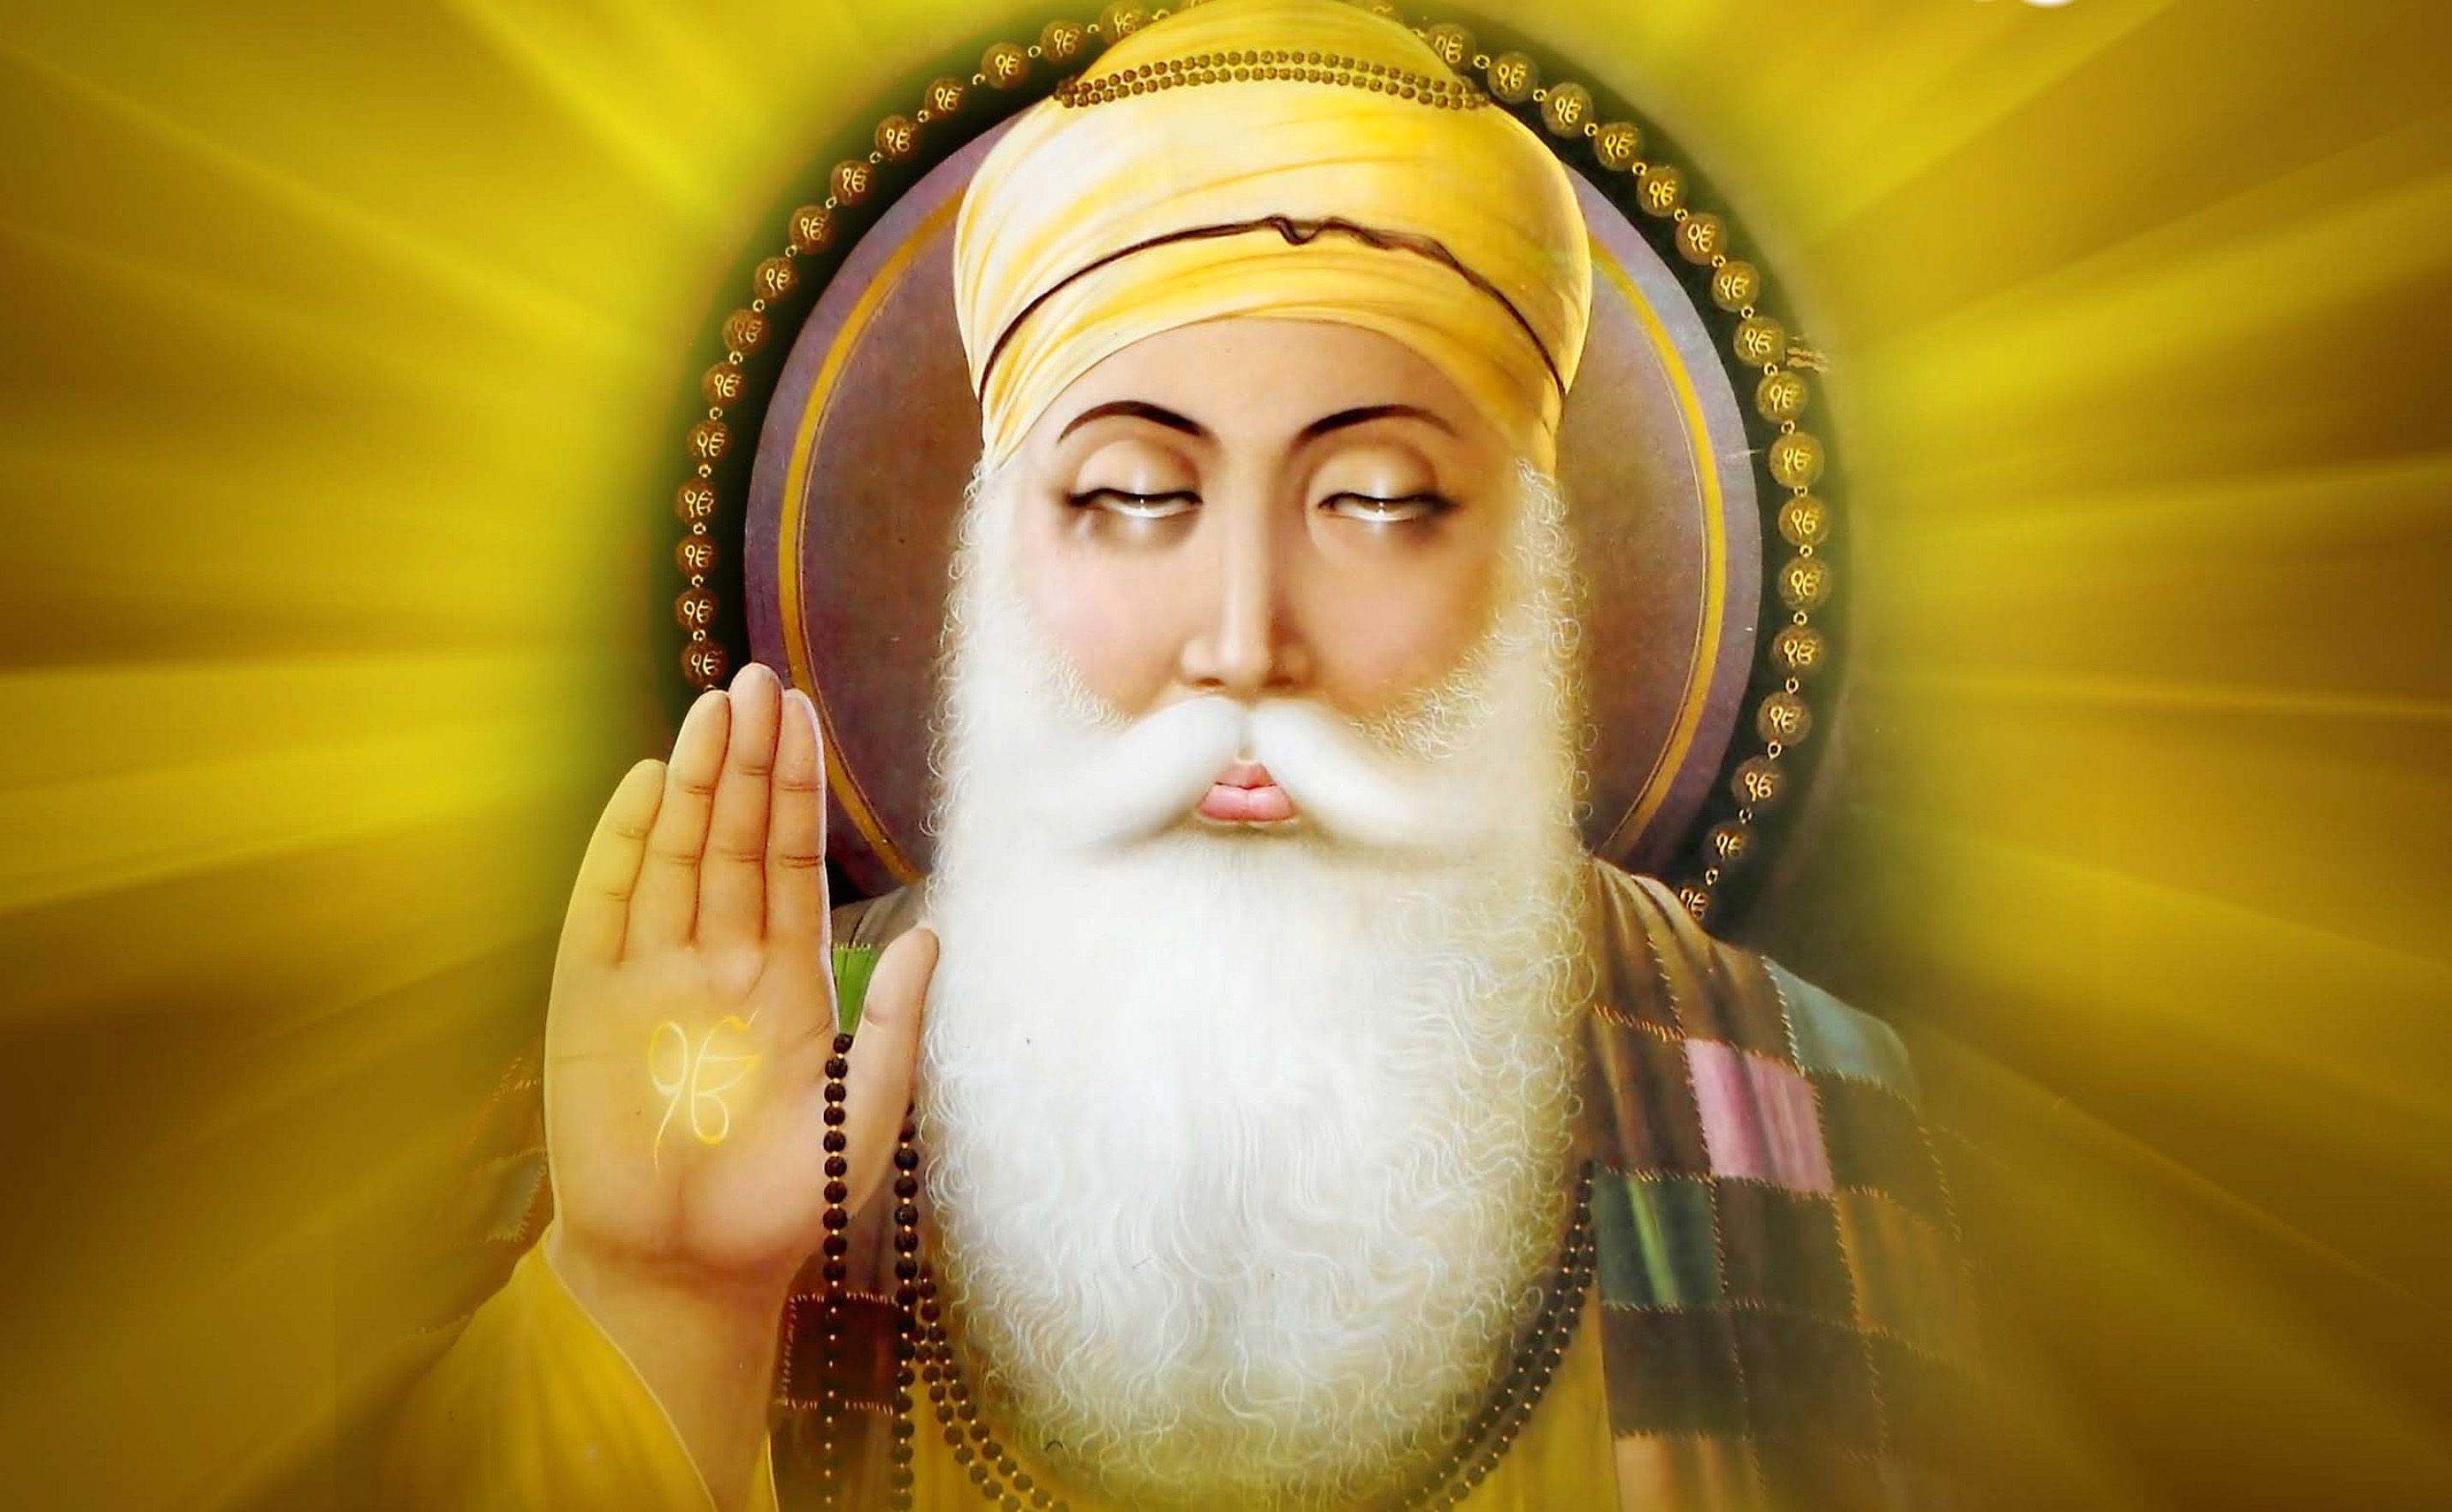 Guru Nanak Jayanti 2019 Date - HD Wallpaper 